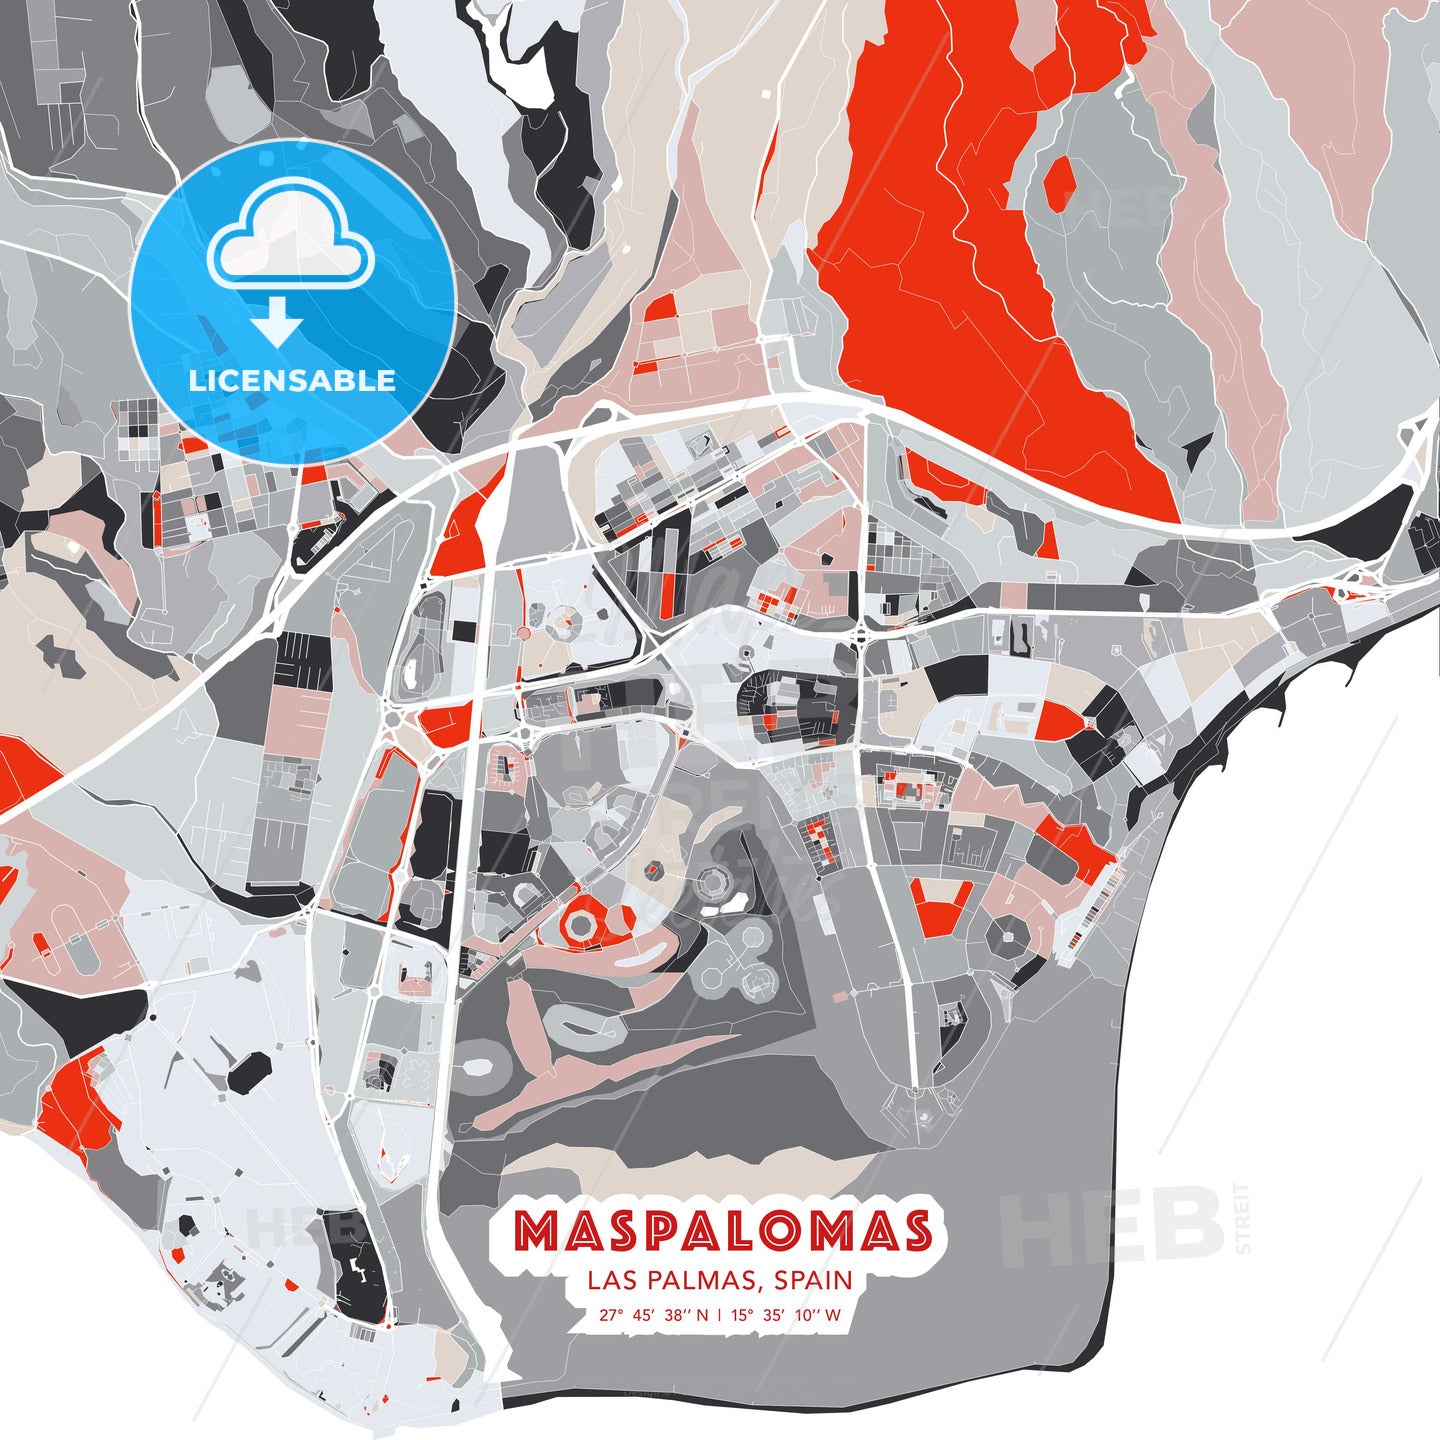 Maspalomas, Las Palmas, Spain, modern map - HEBSTREITS Sketches